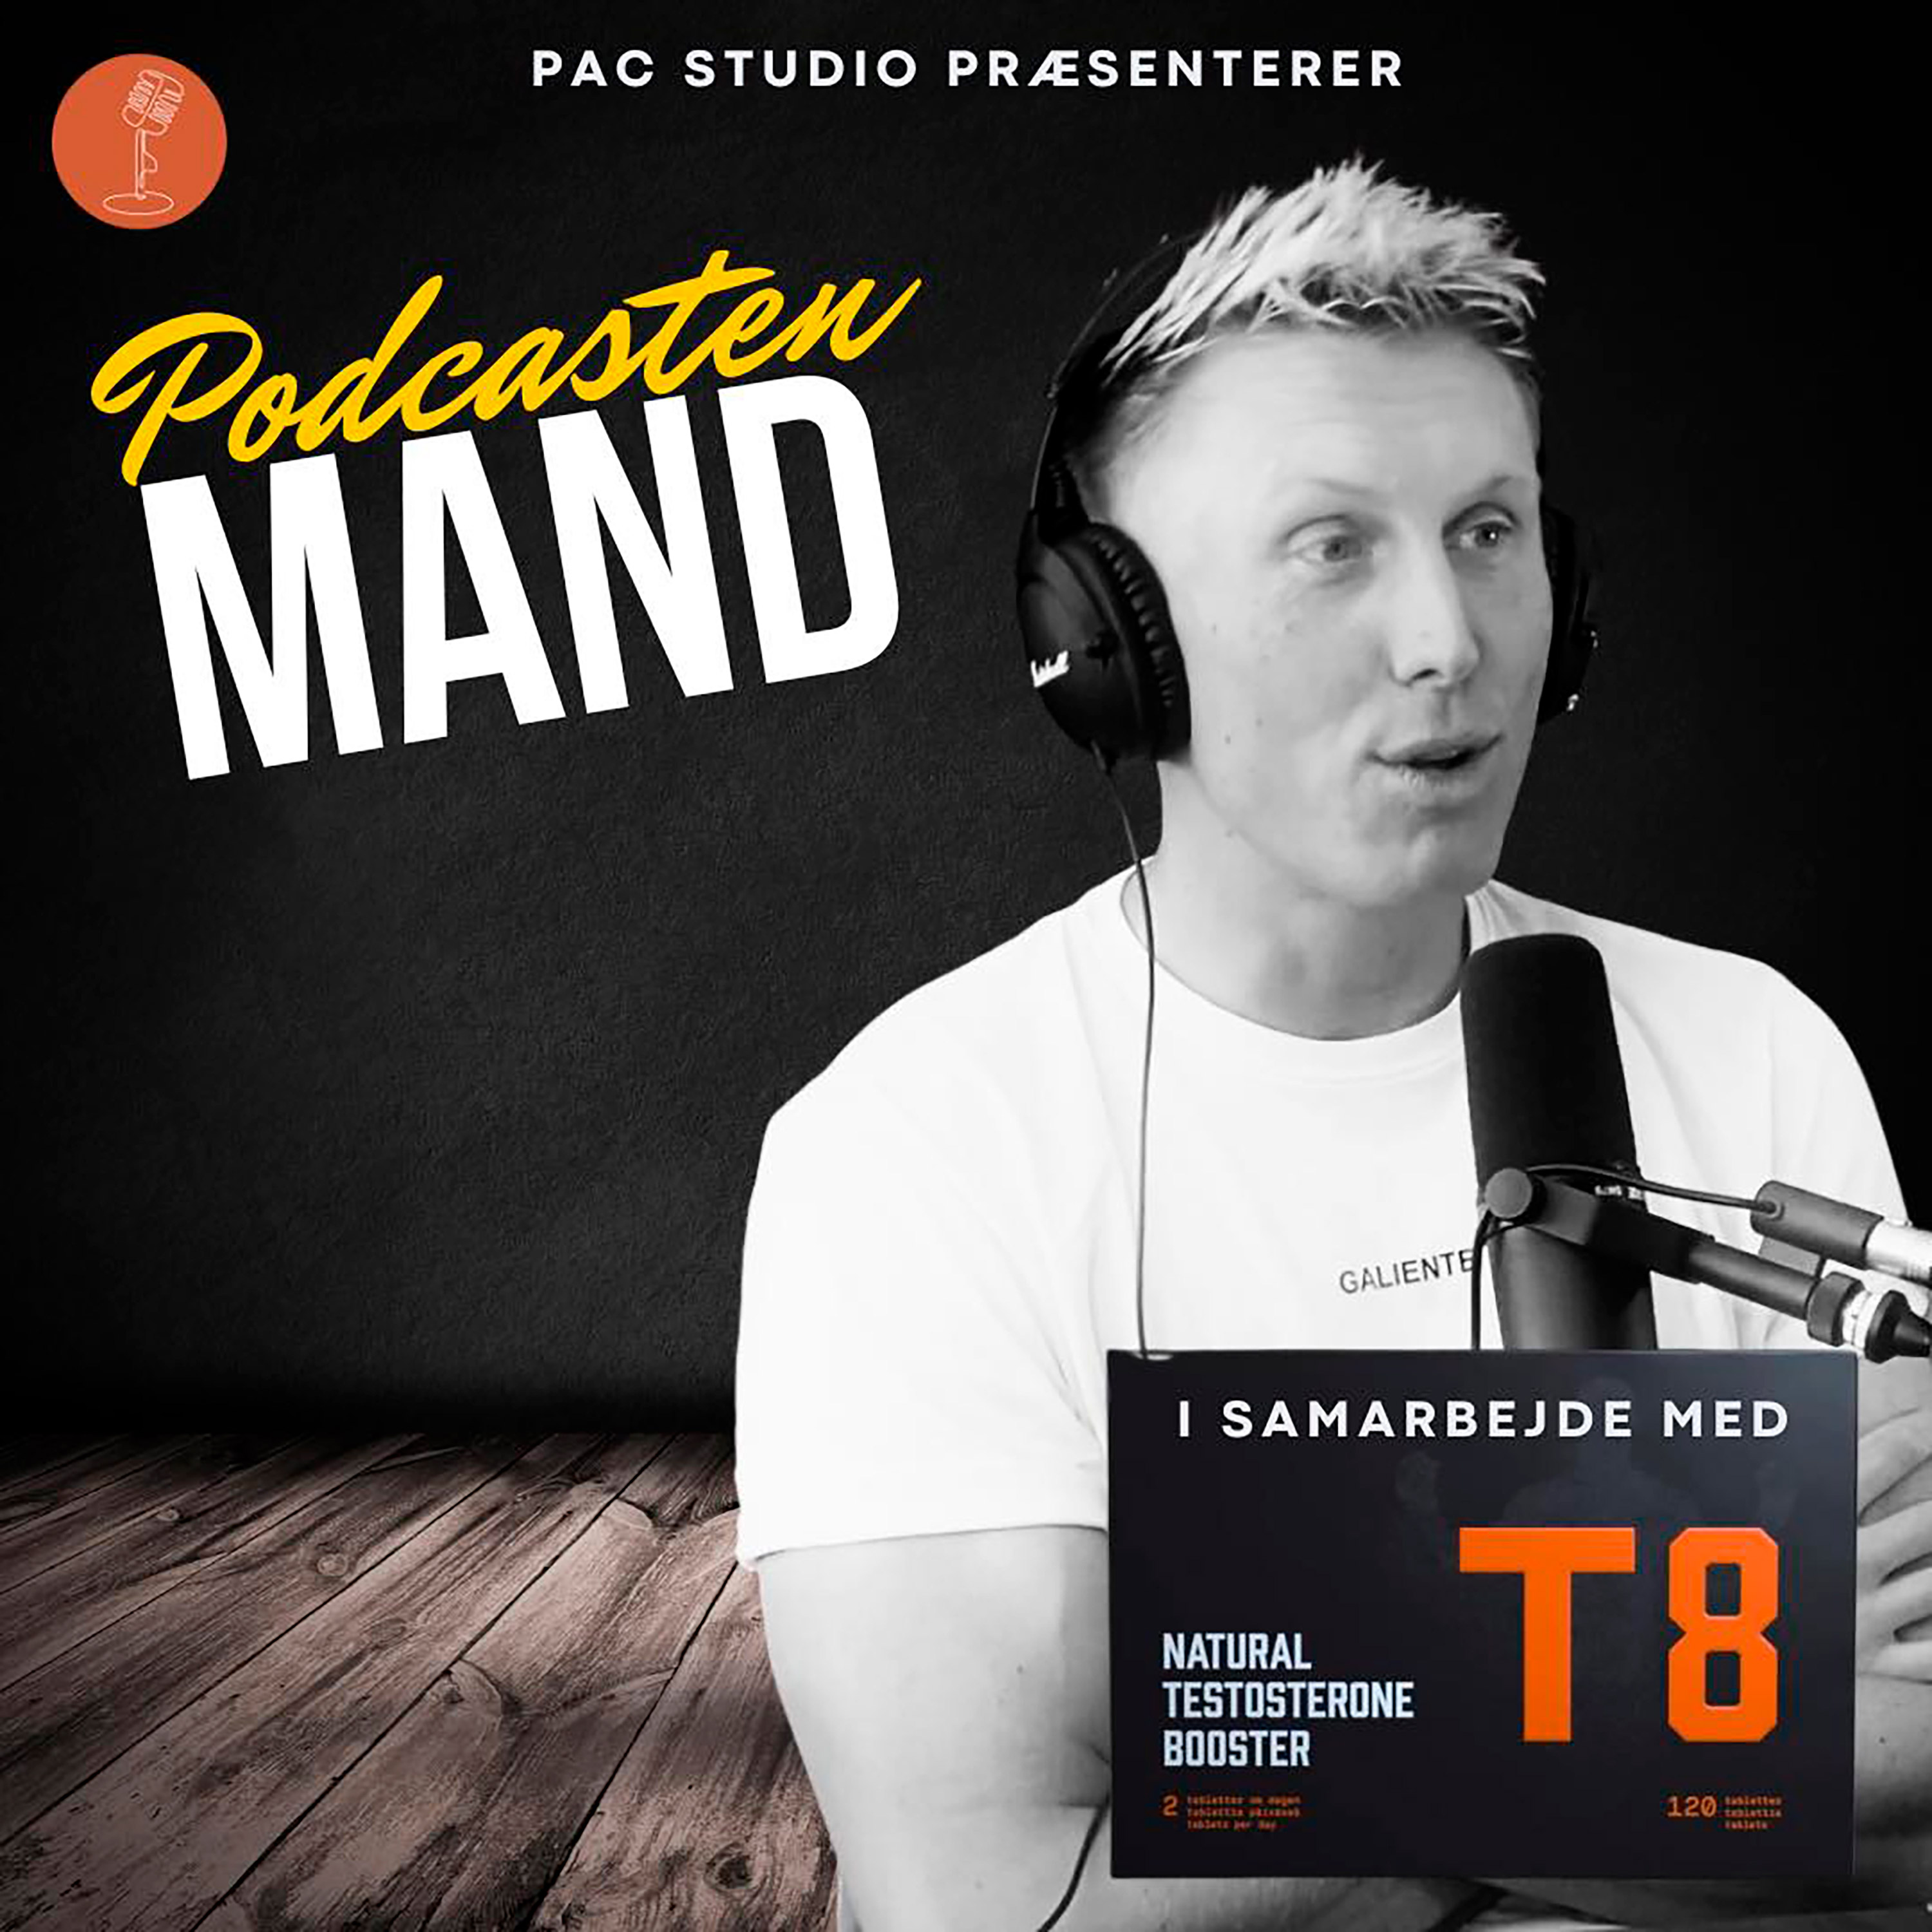 Podcasten MAND / Mathias Hjort